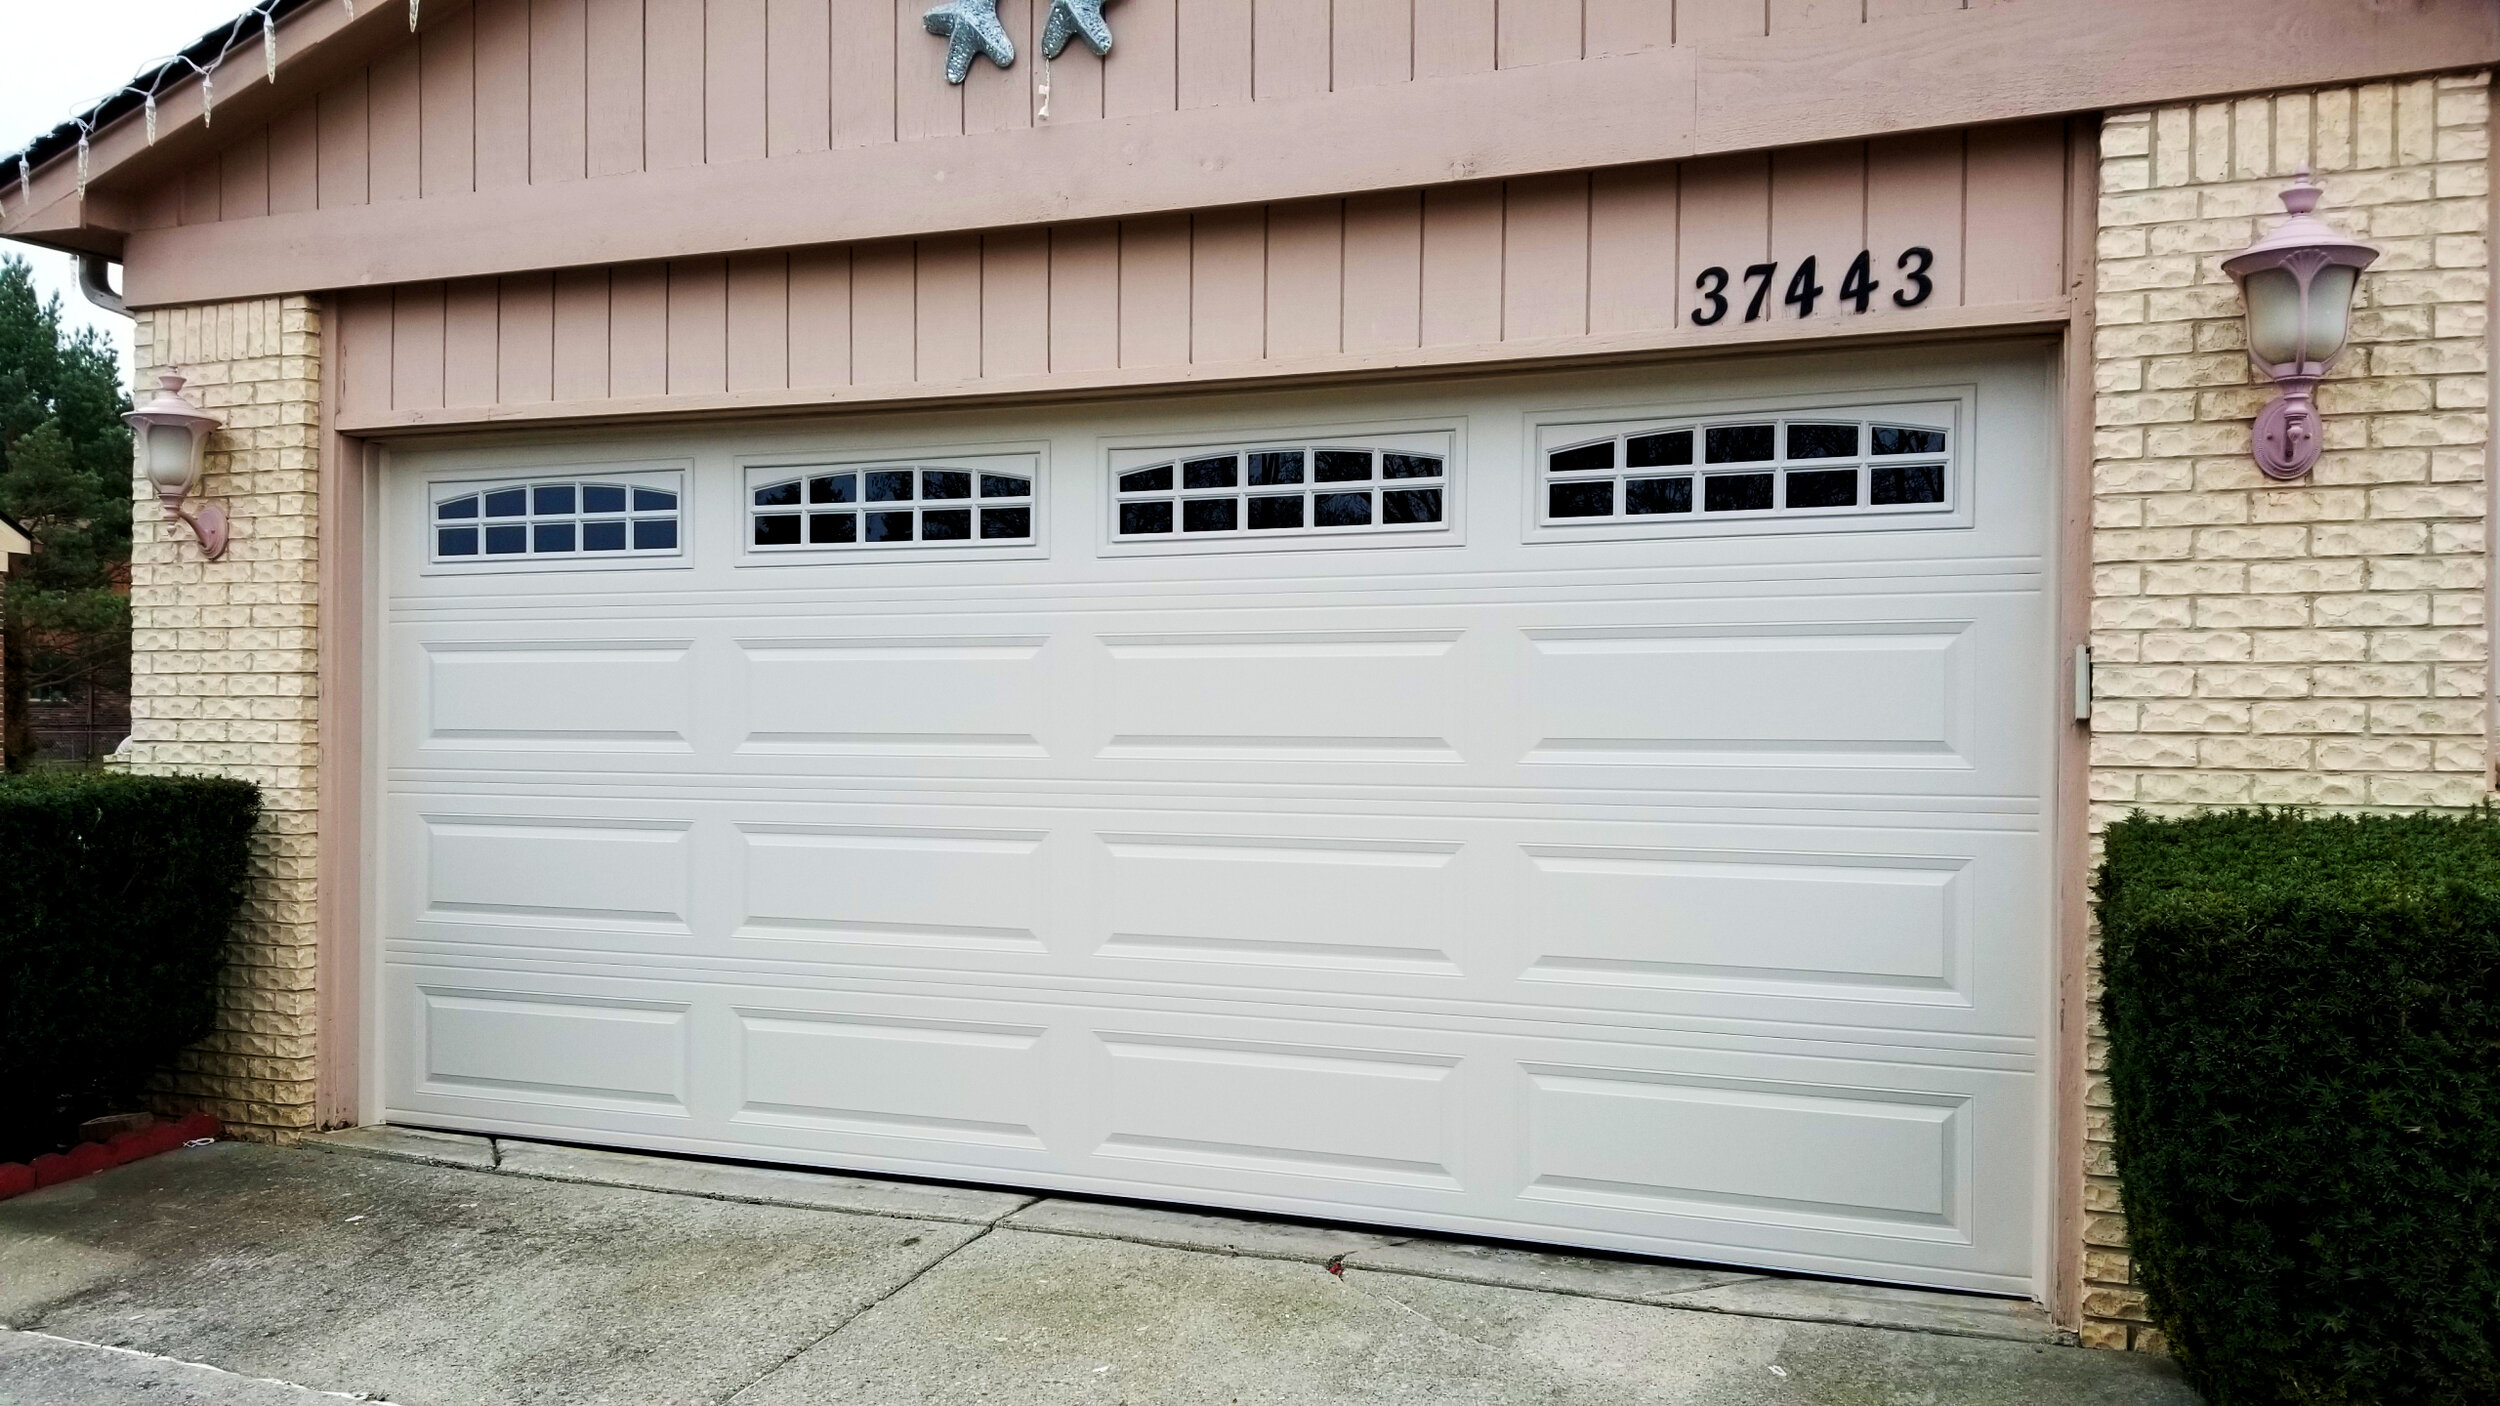 Harrison Township MI New Garage Door Sales and Springs Repaired Liftmaster Dealer